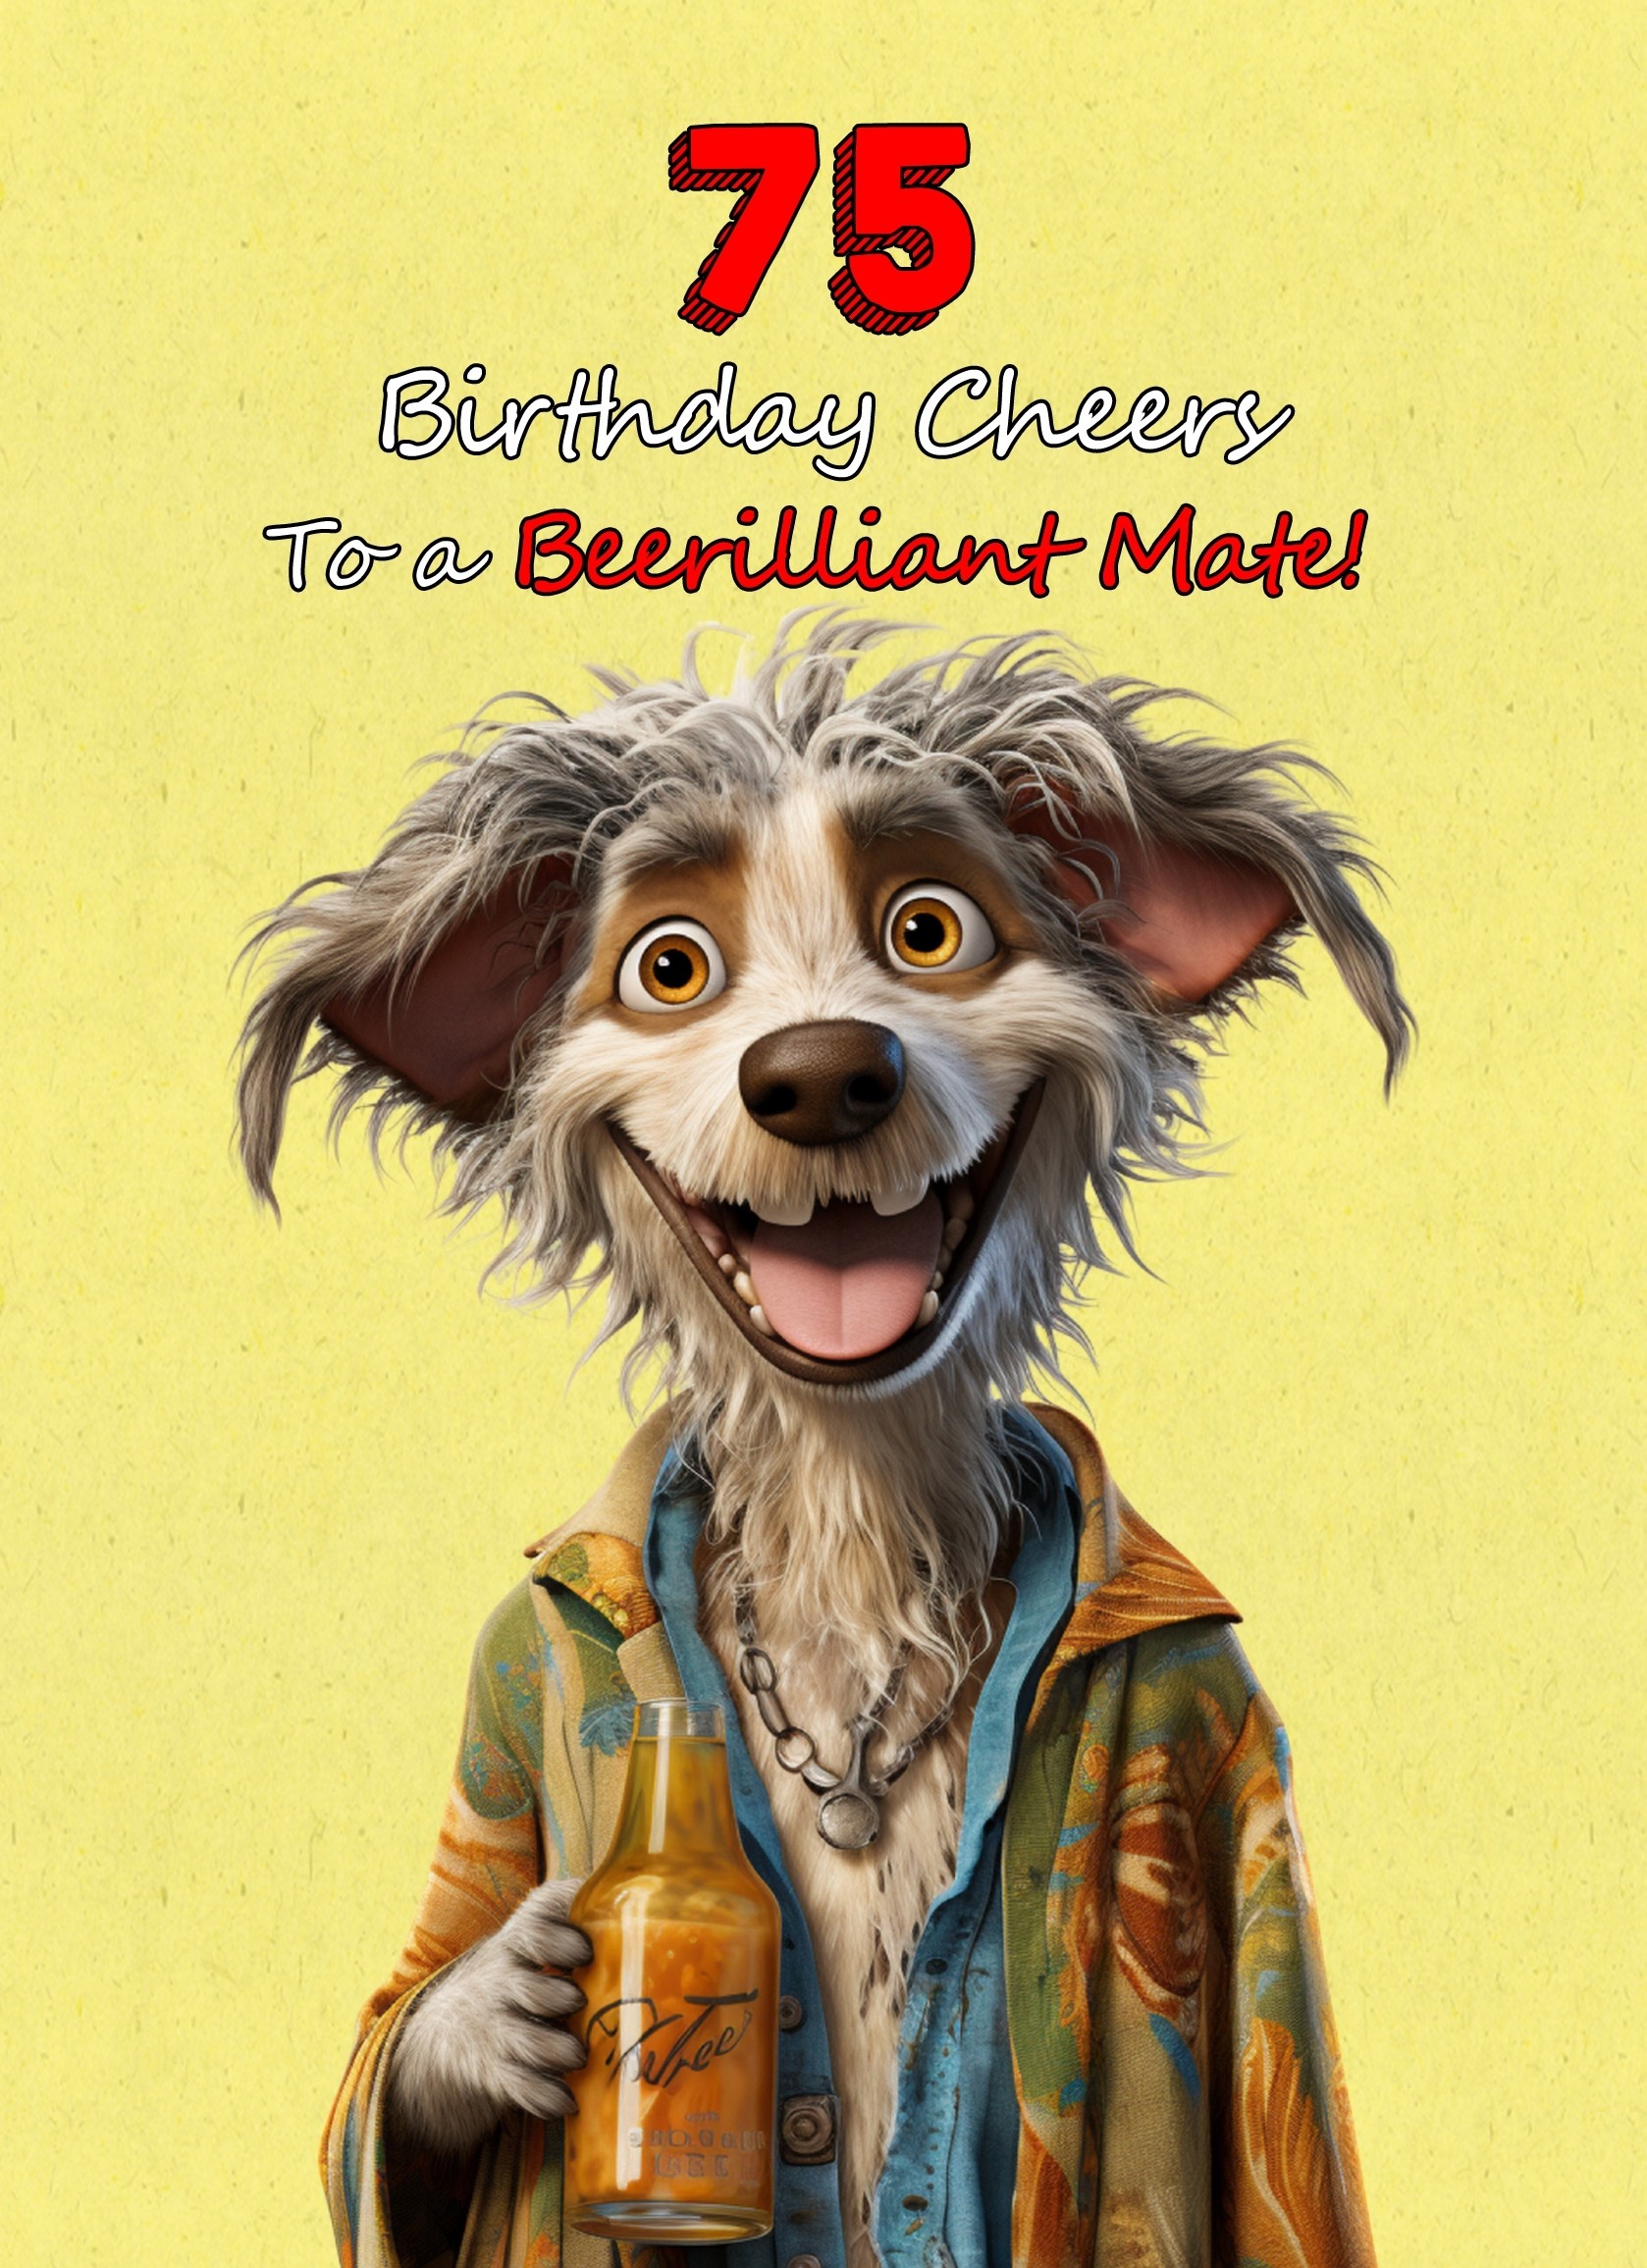 Mate 75th Birthday Card (Funny Beerilliant Birthday Cheers, Design 2)